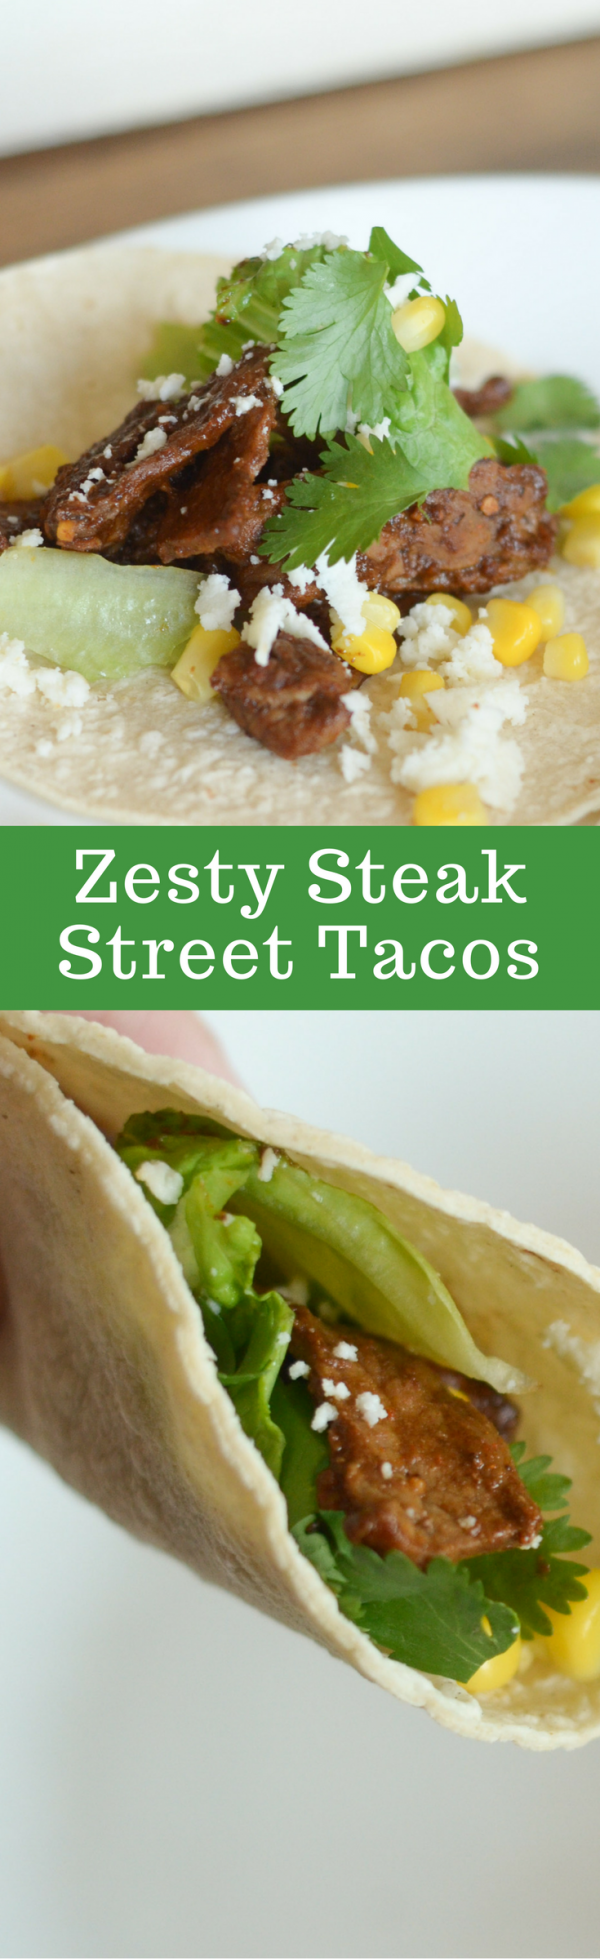 Zesty Steak Street Tacos